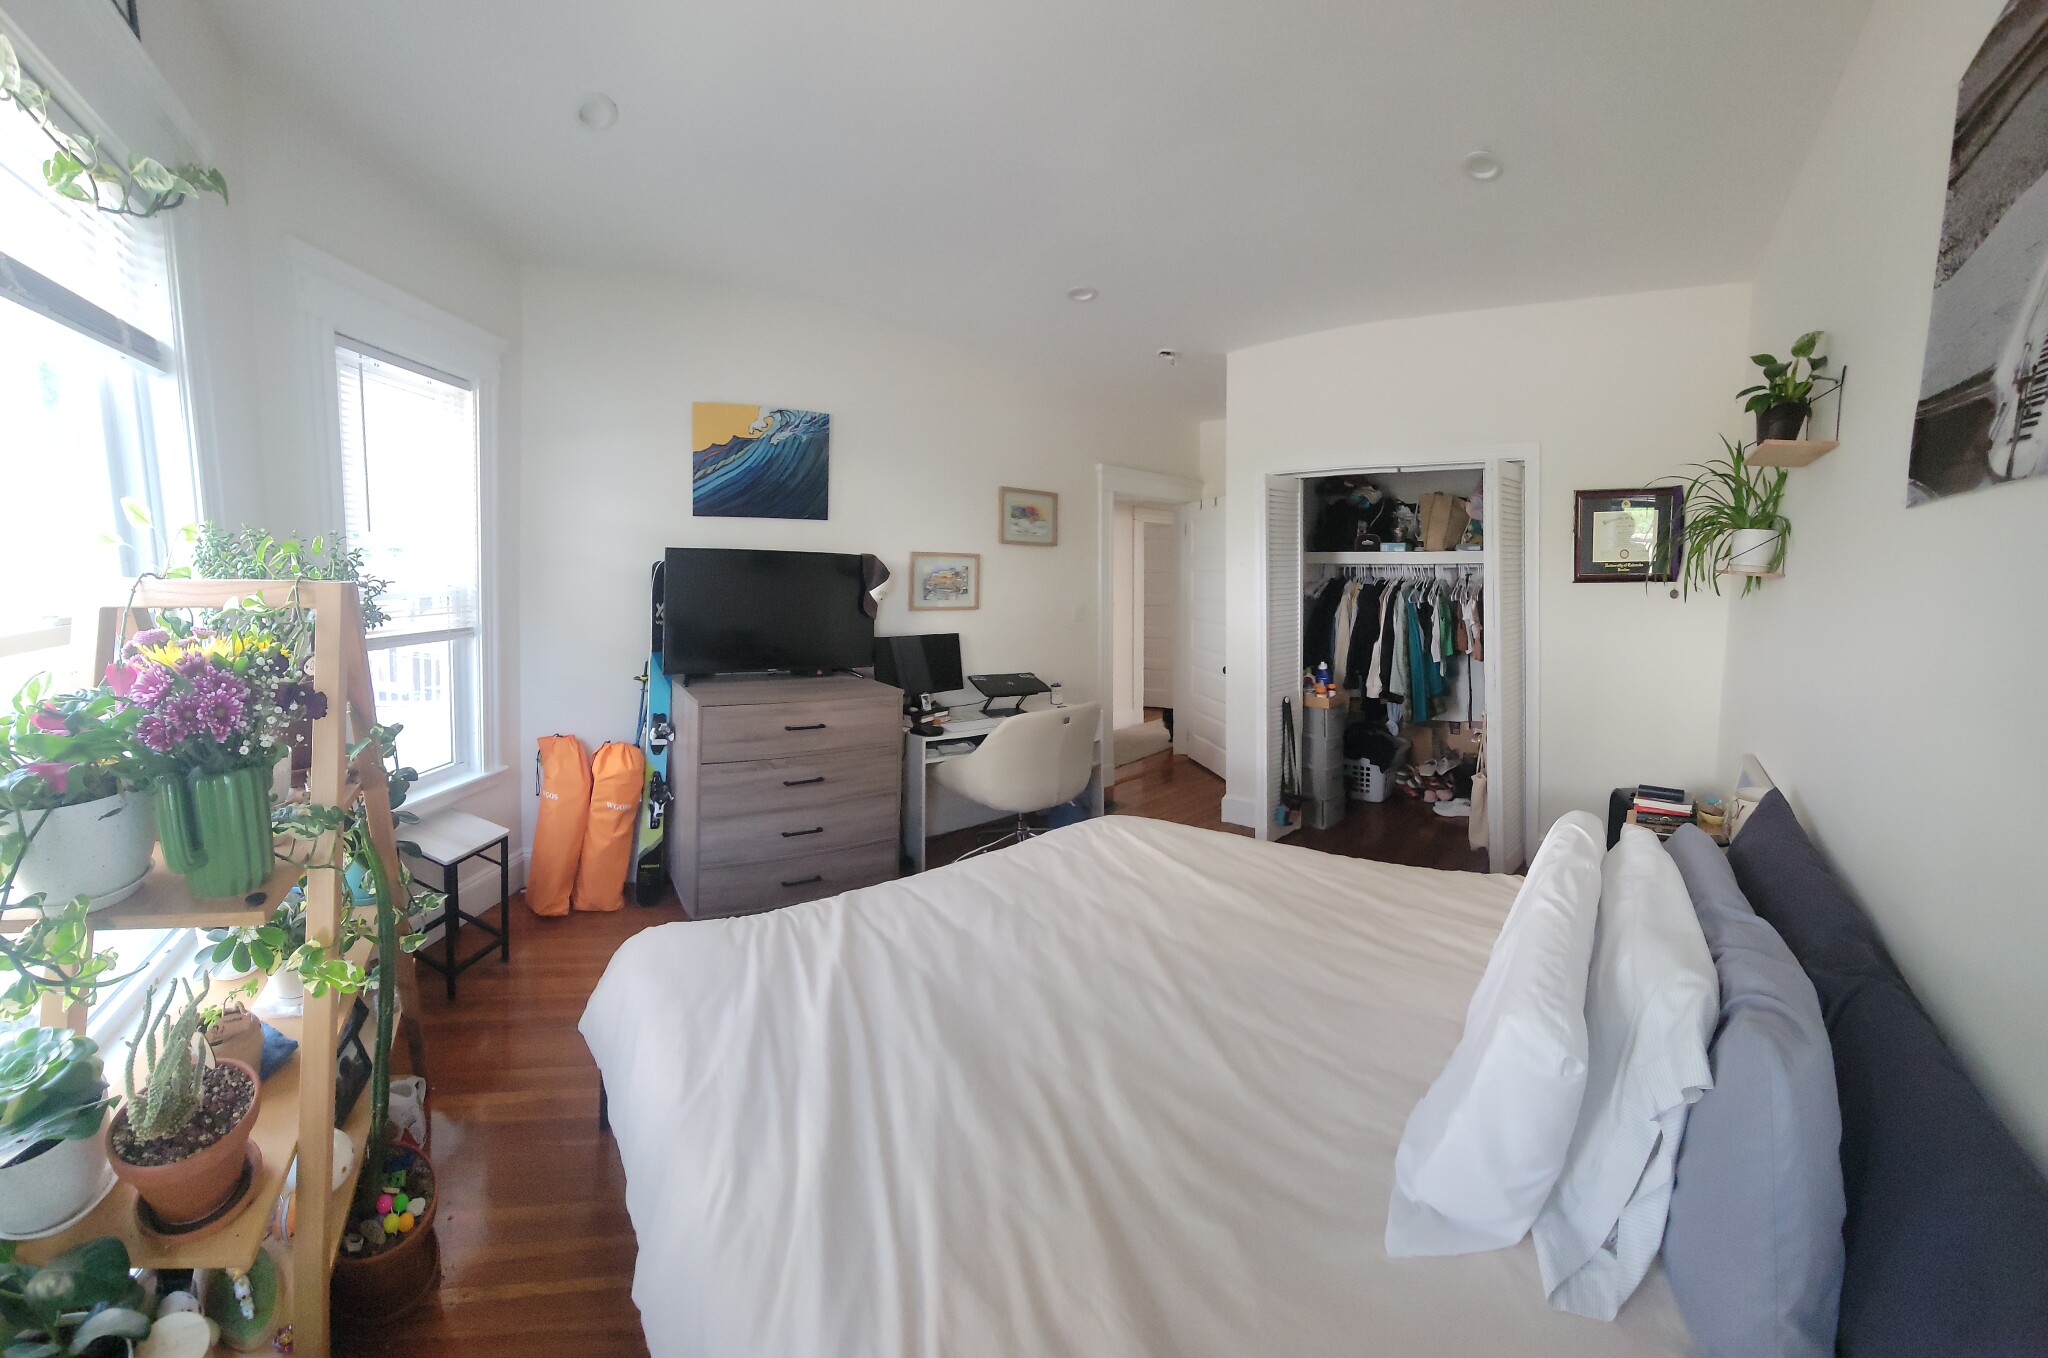 Photos of apartment on Minot,Boston MA 02122